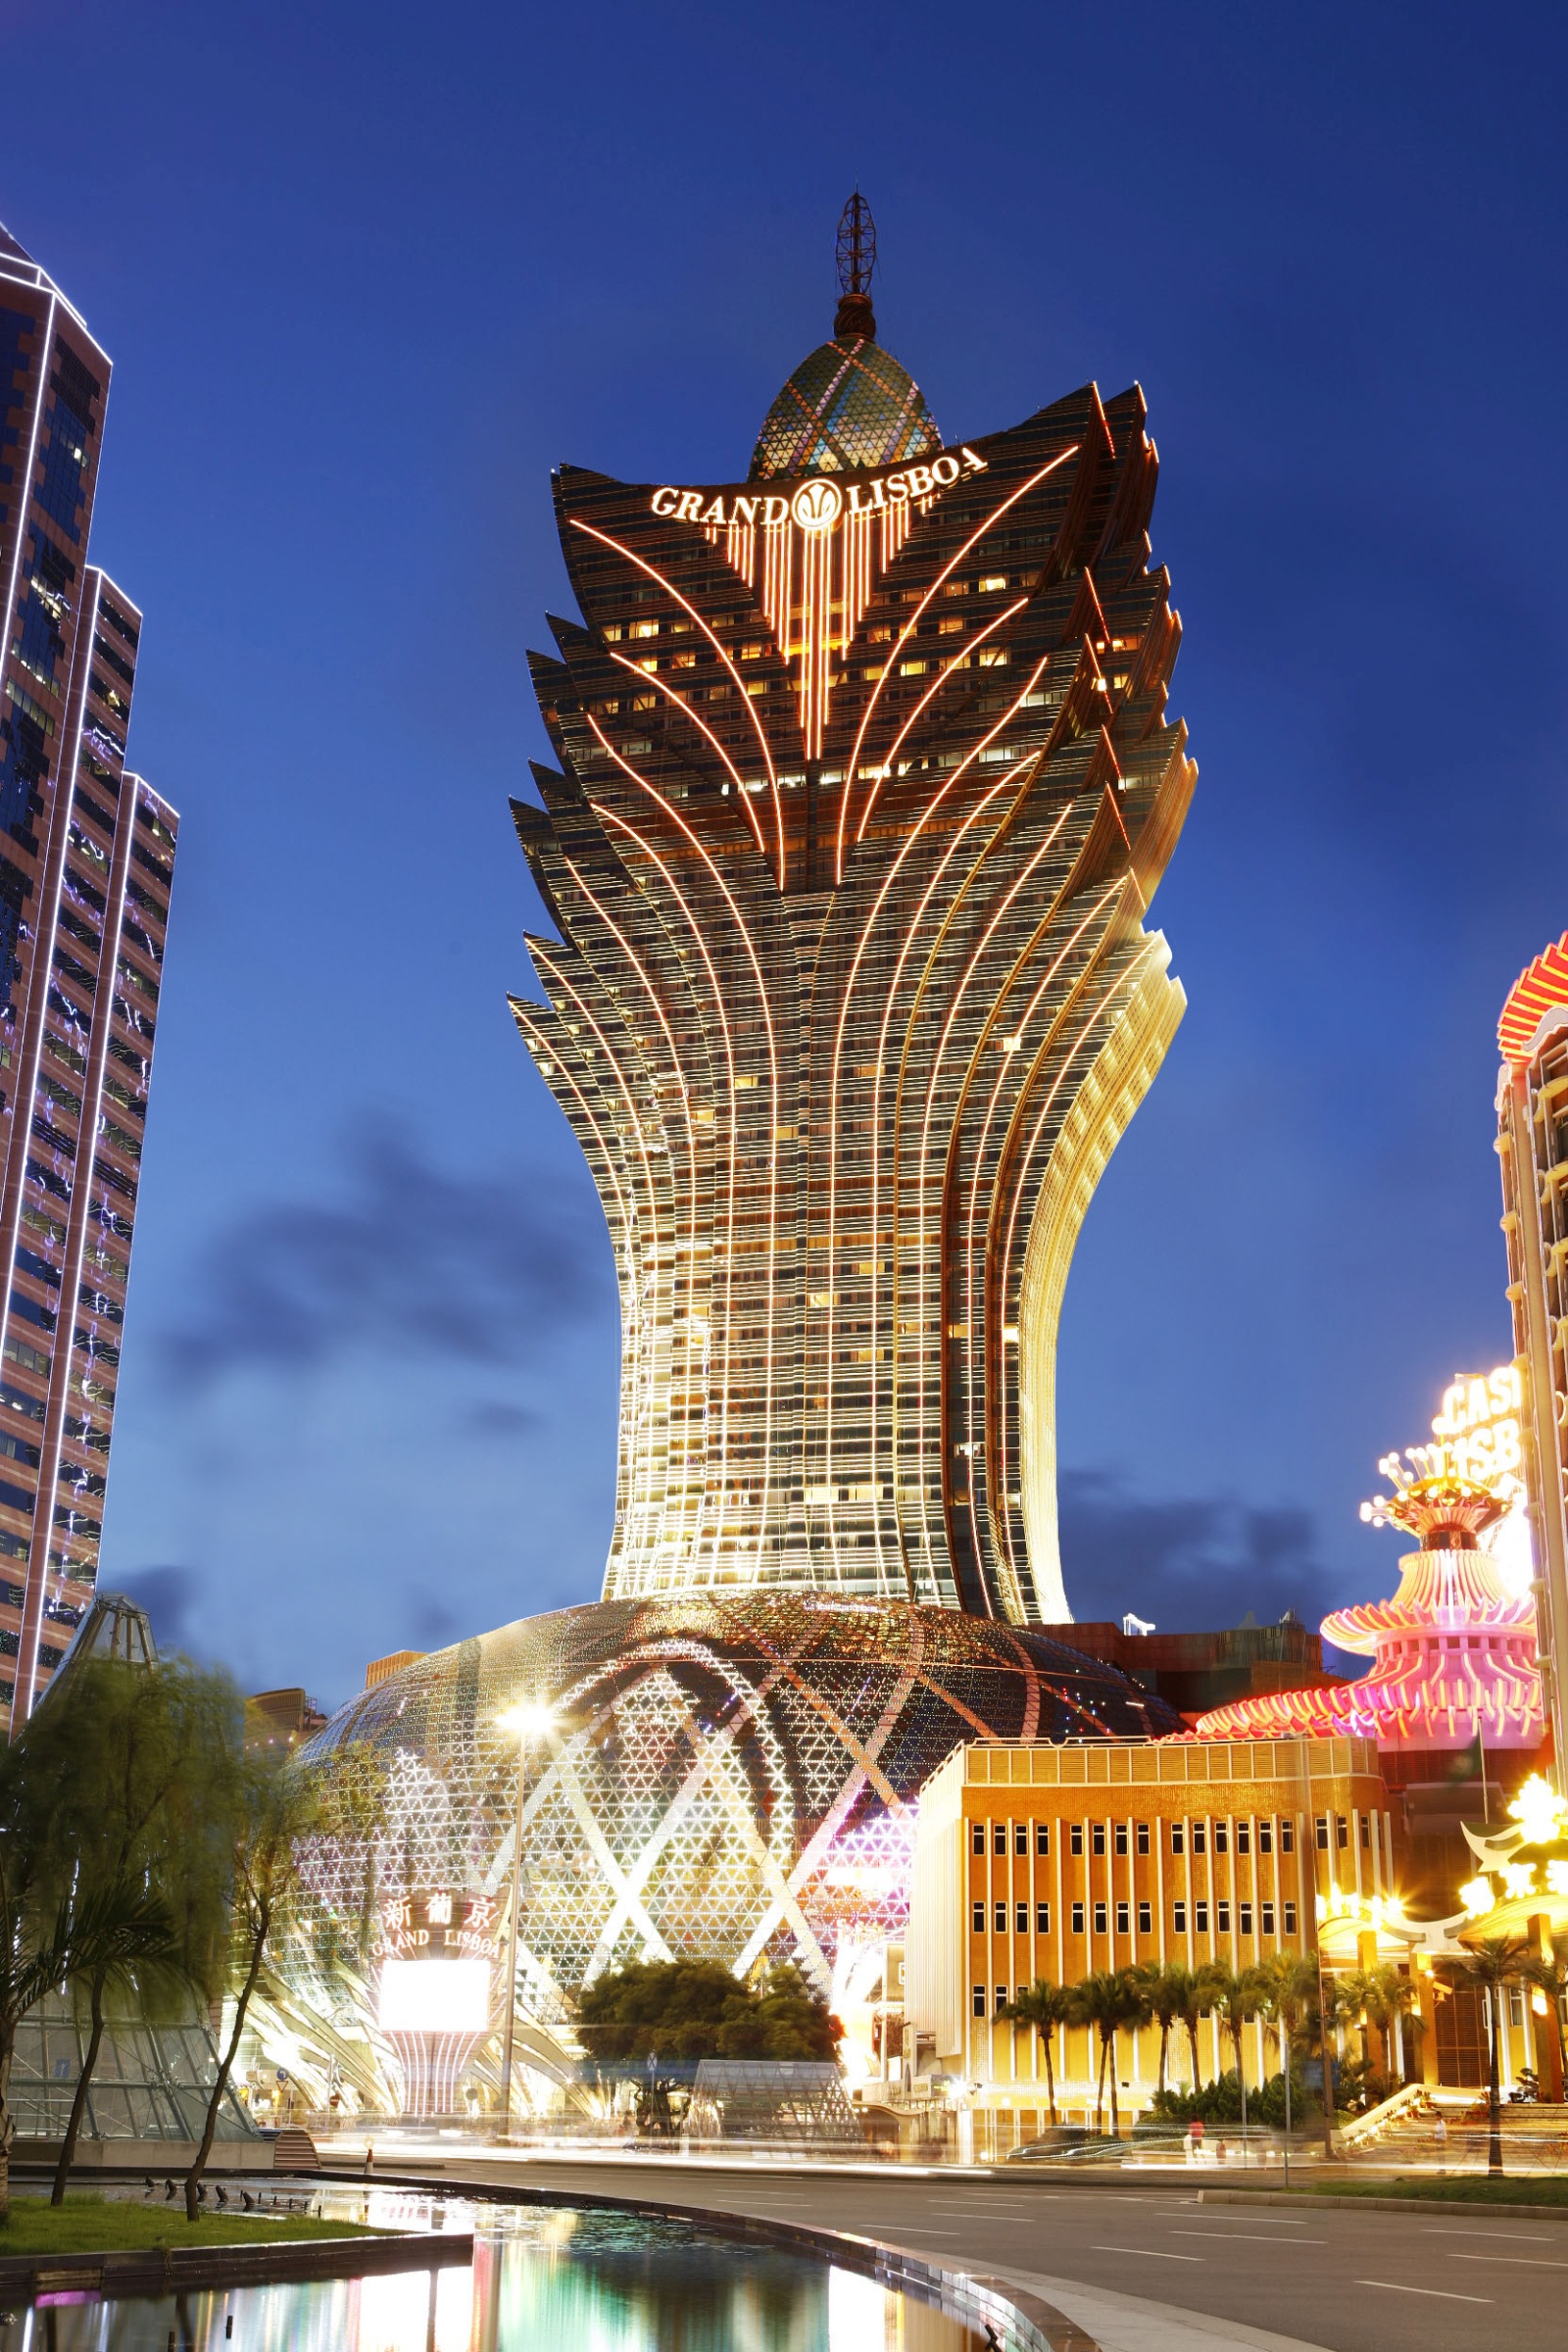 Grand Macao Casino